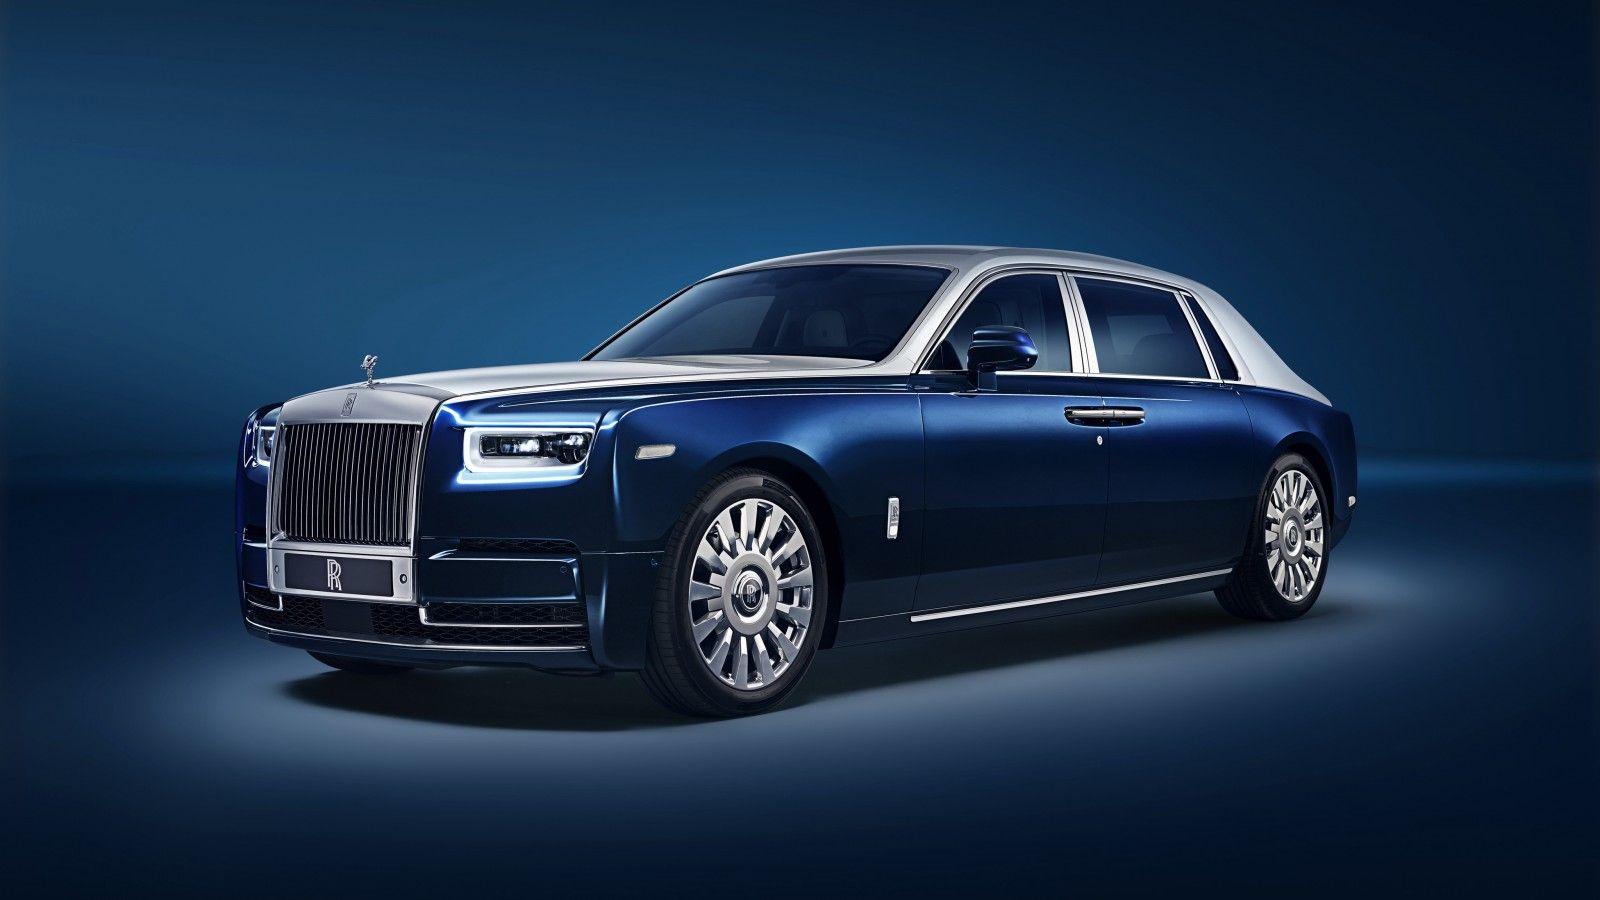 Download 1600x900 Rolls Royce Phantom Luxury Cars Wallpaper